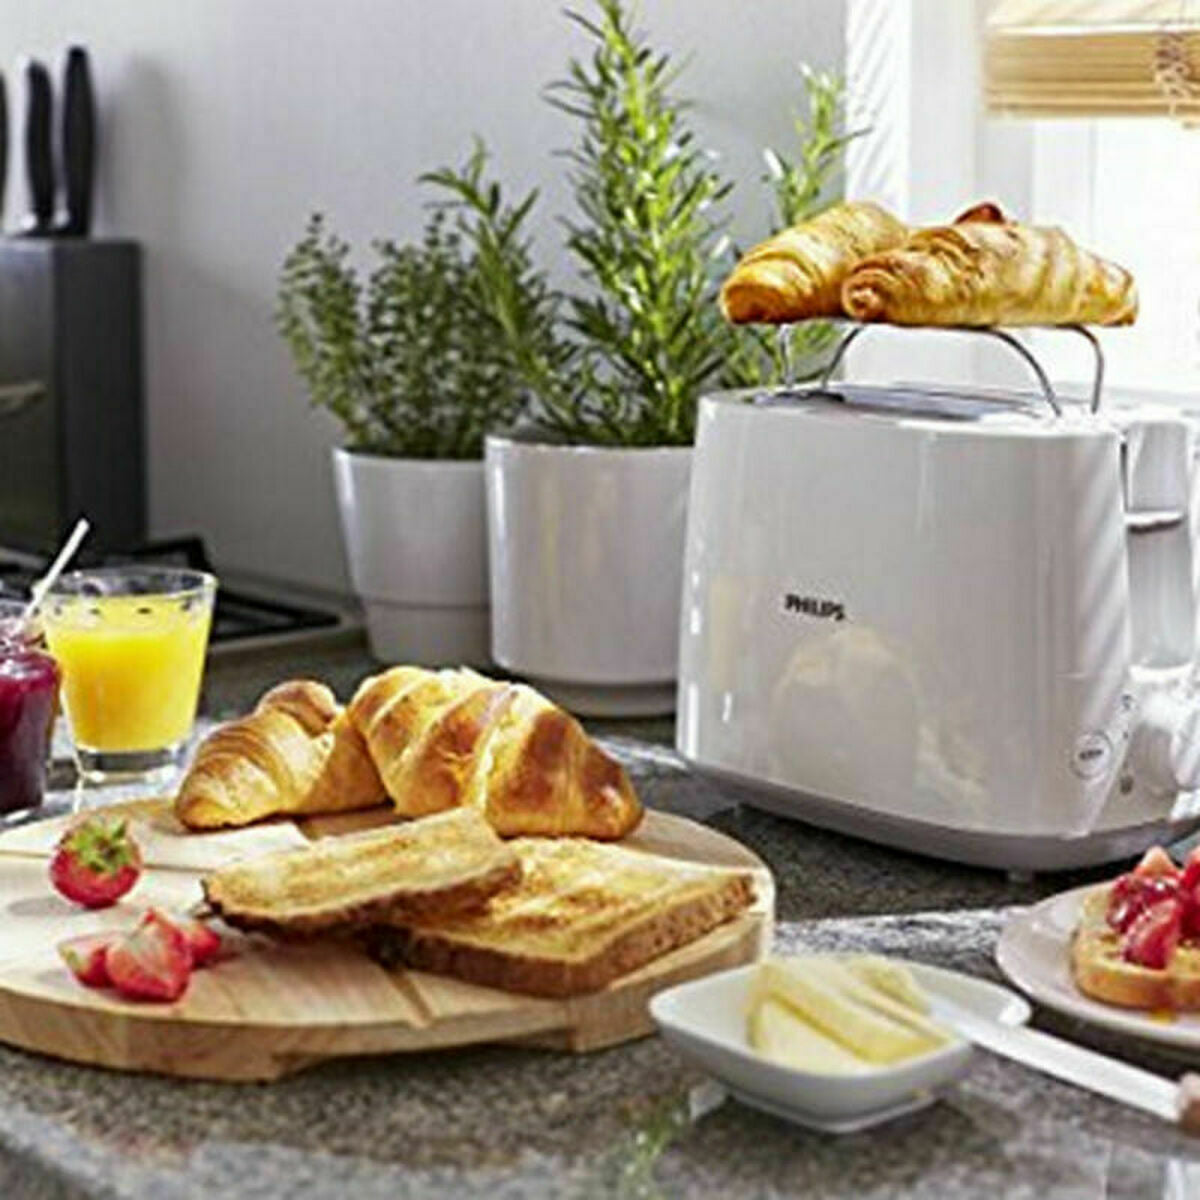 Toaster Philips HD2581 830 W - CA International  